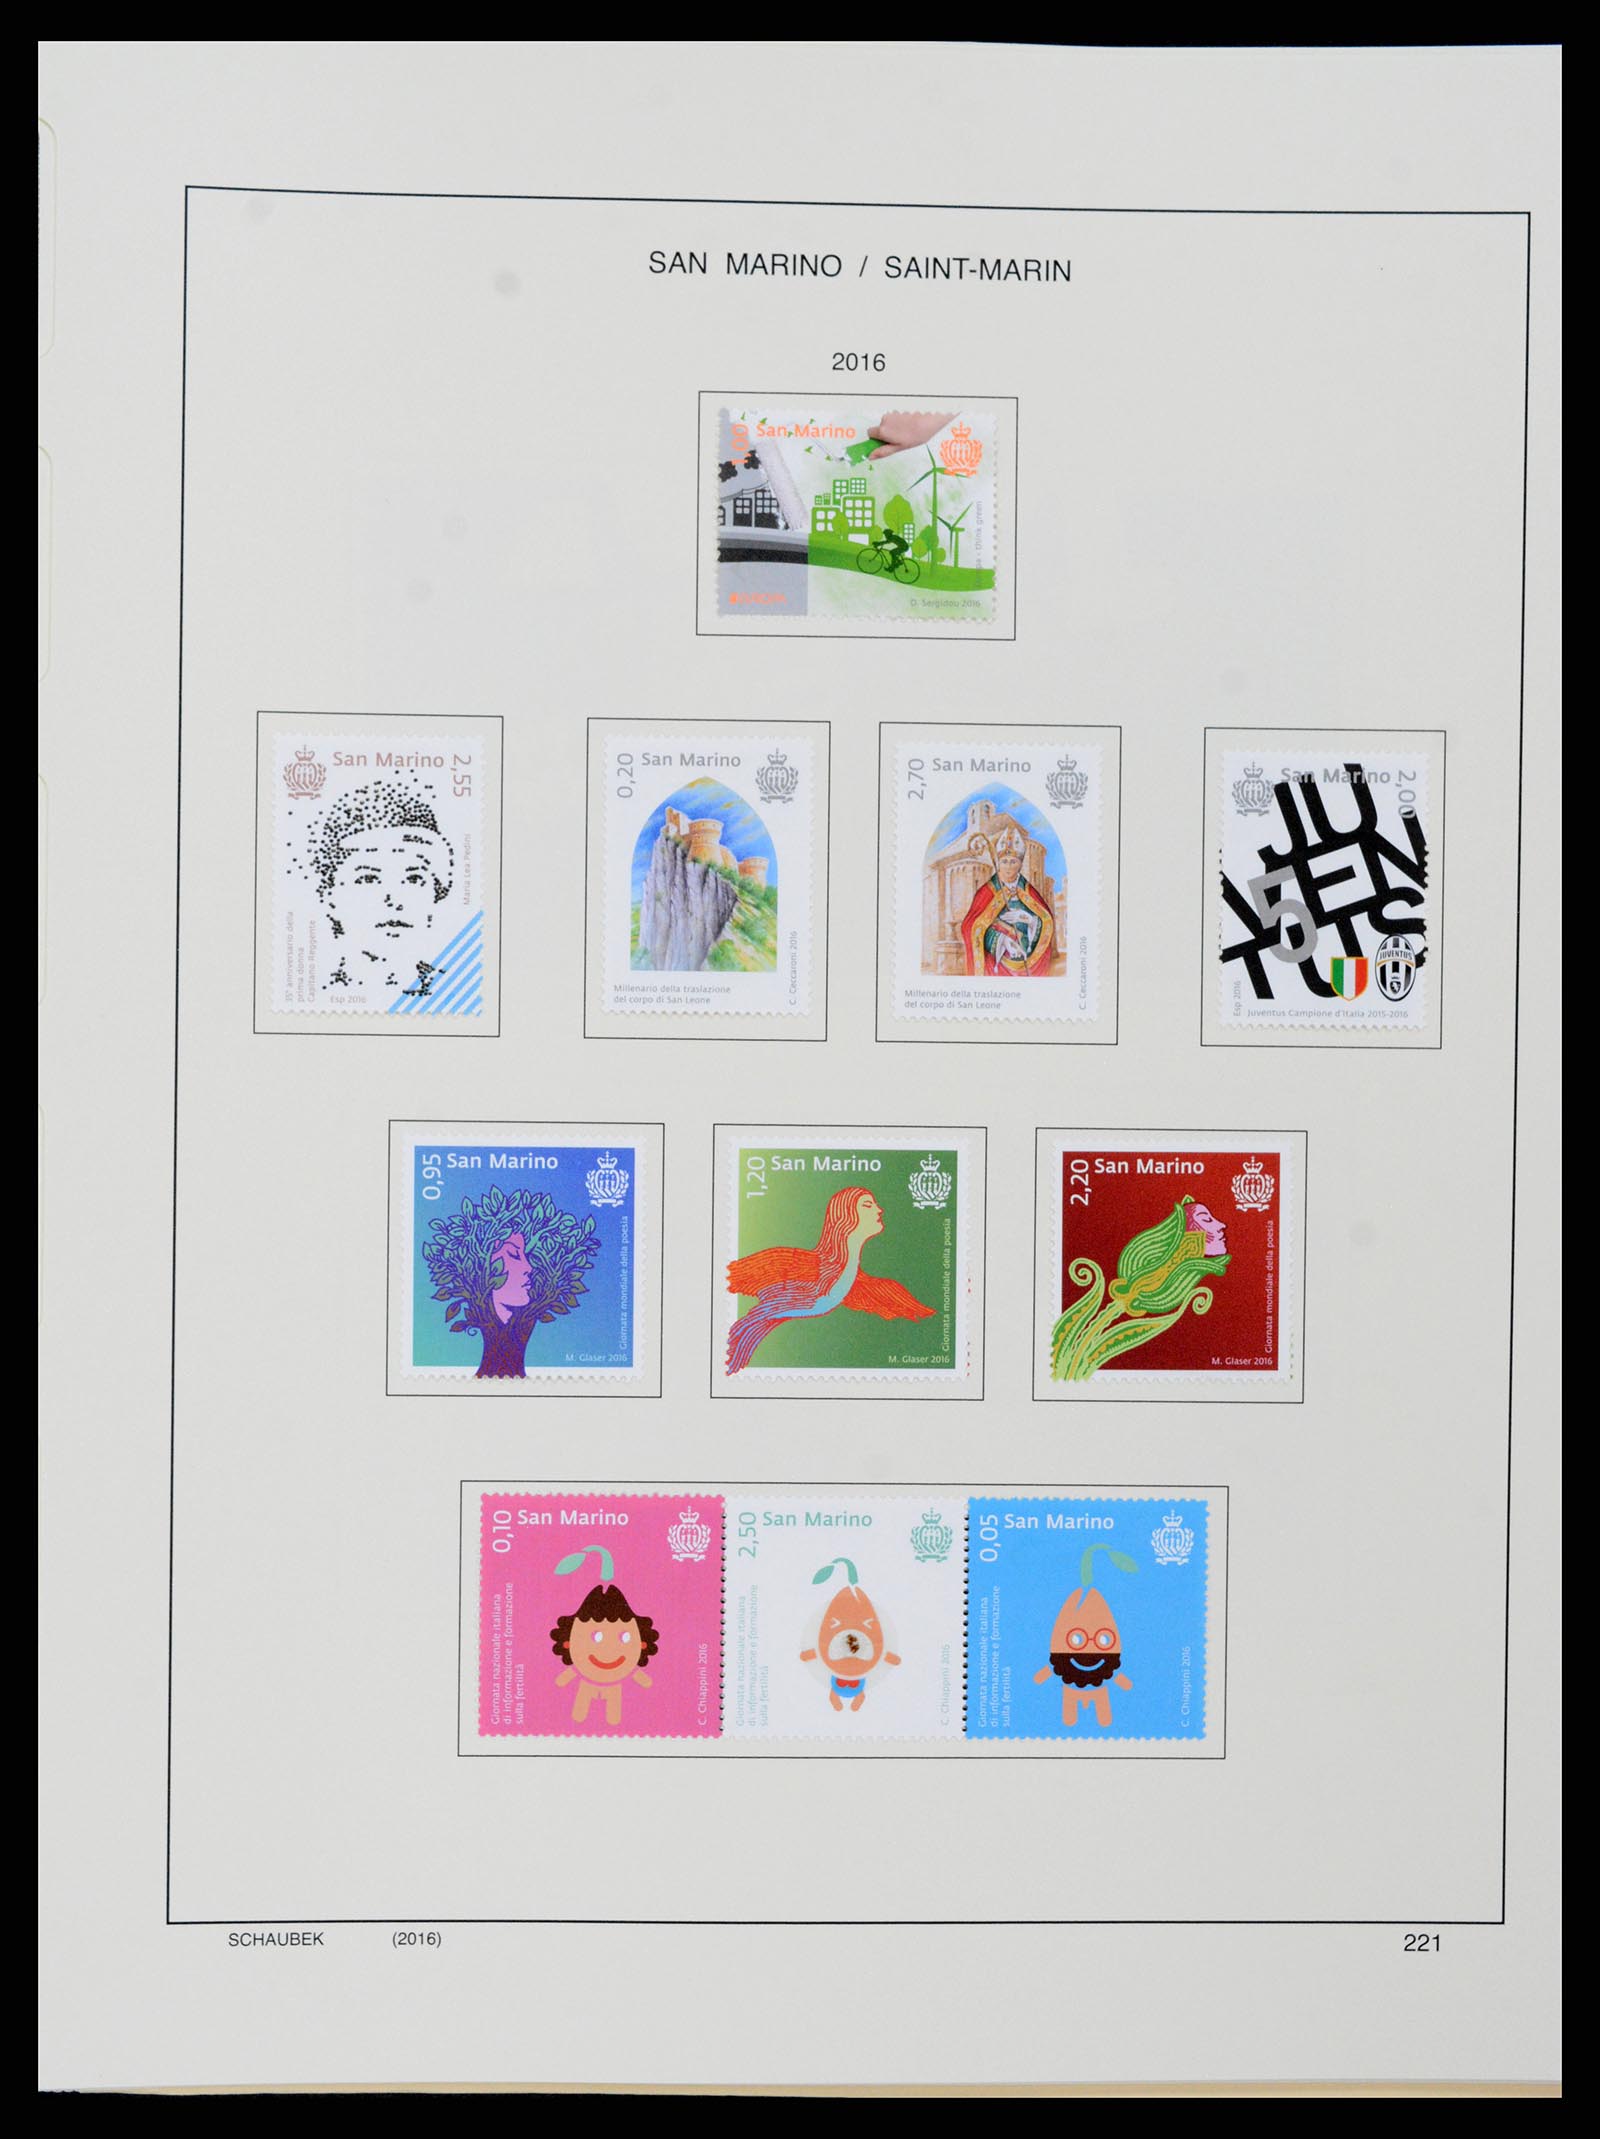 37556 289 - Stamp collection 37556 San Marino 1877-2017.